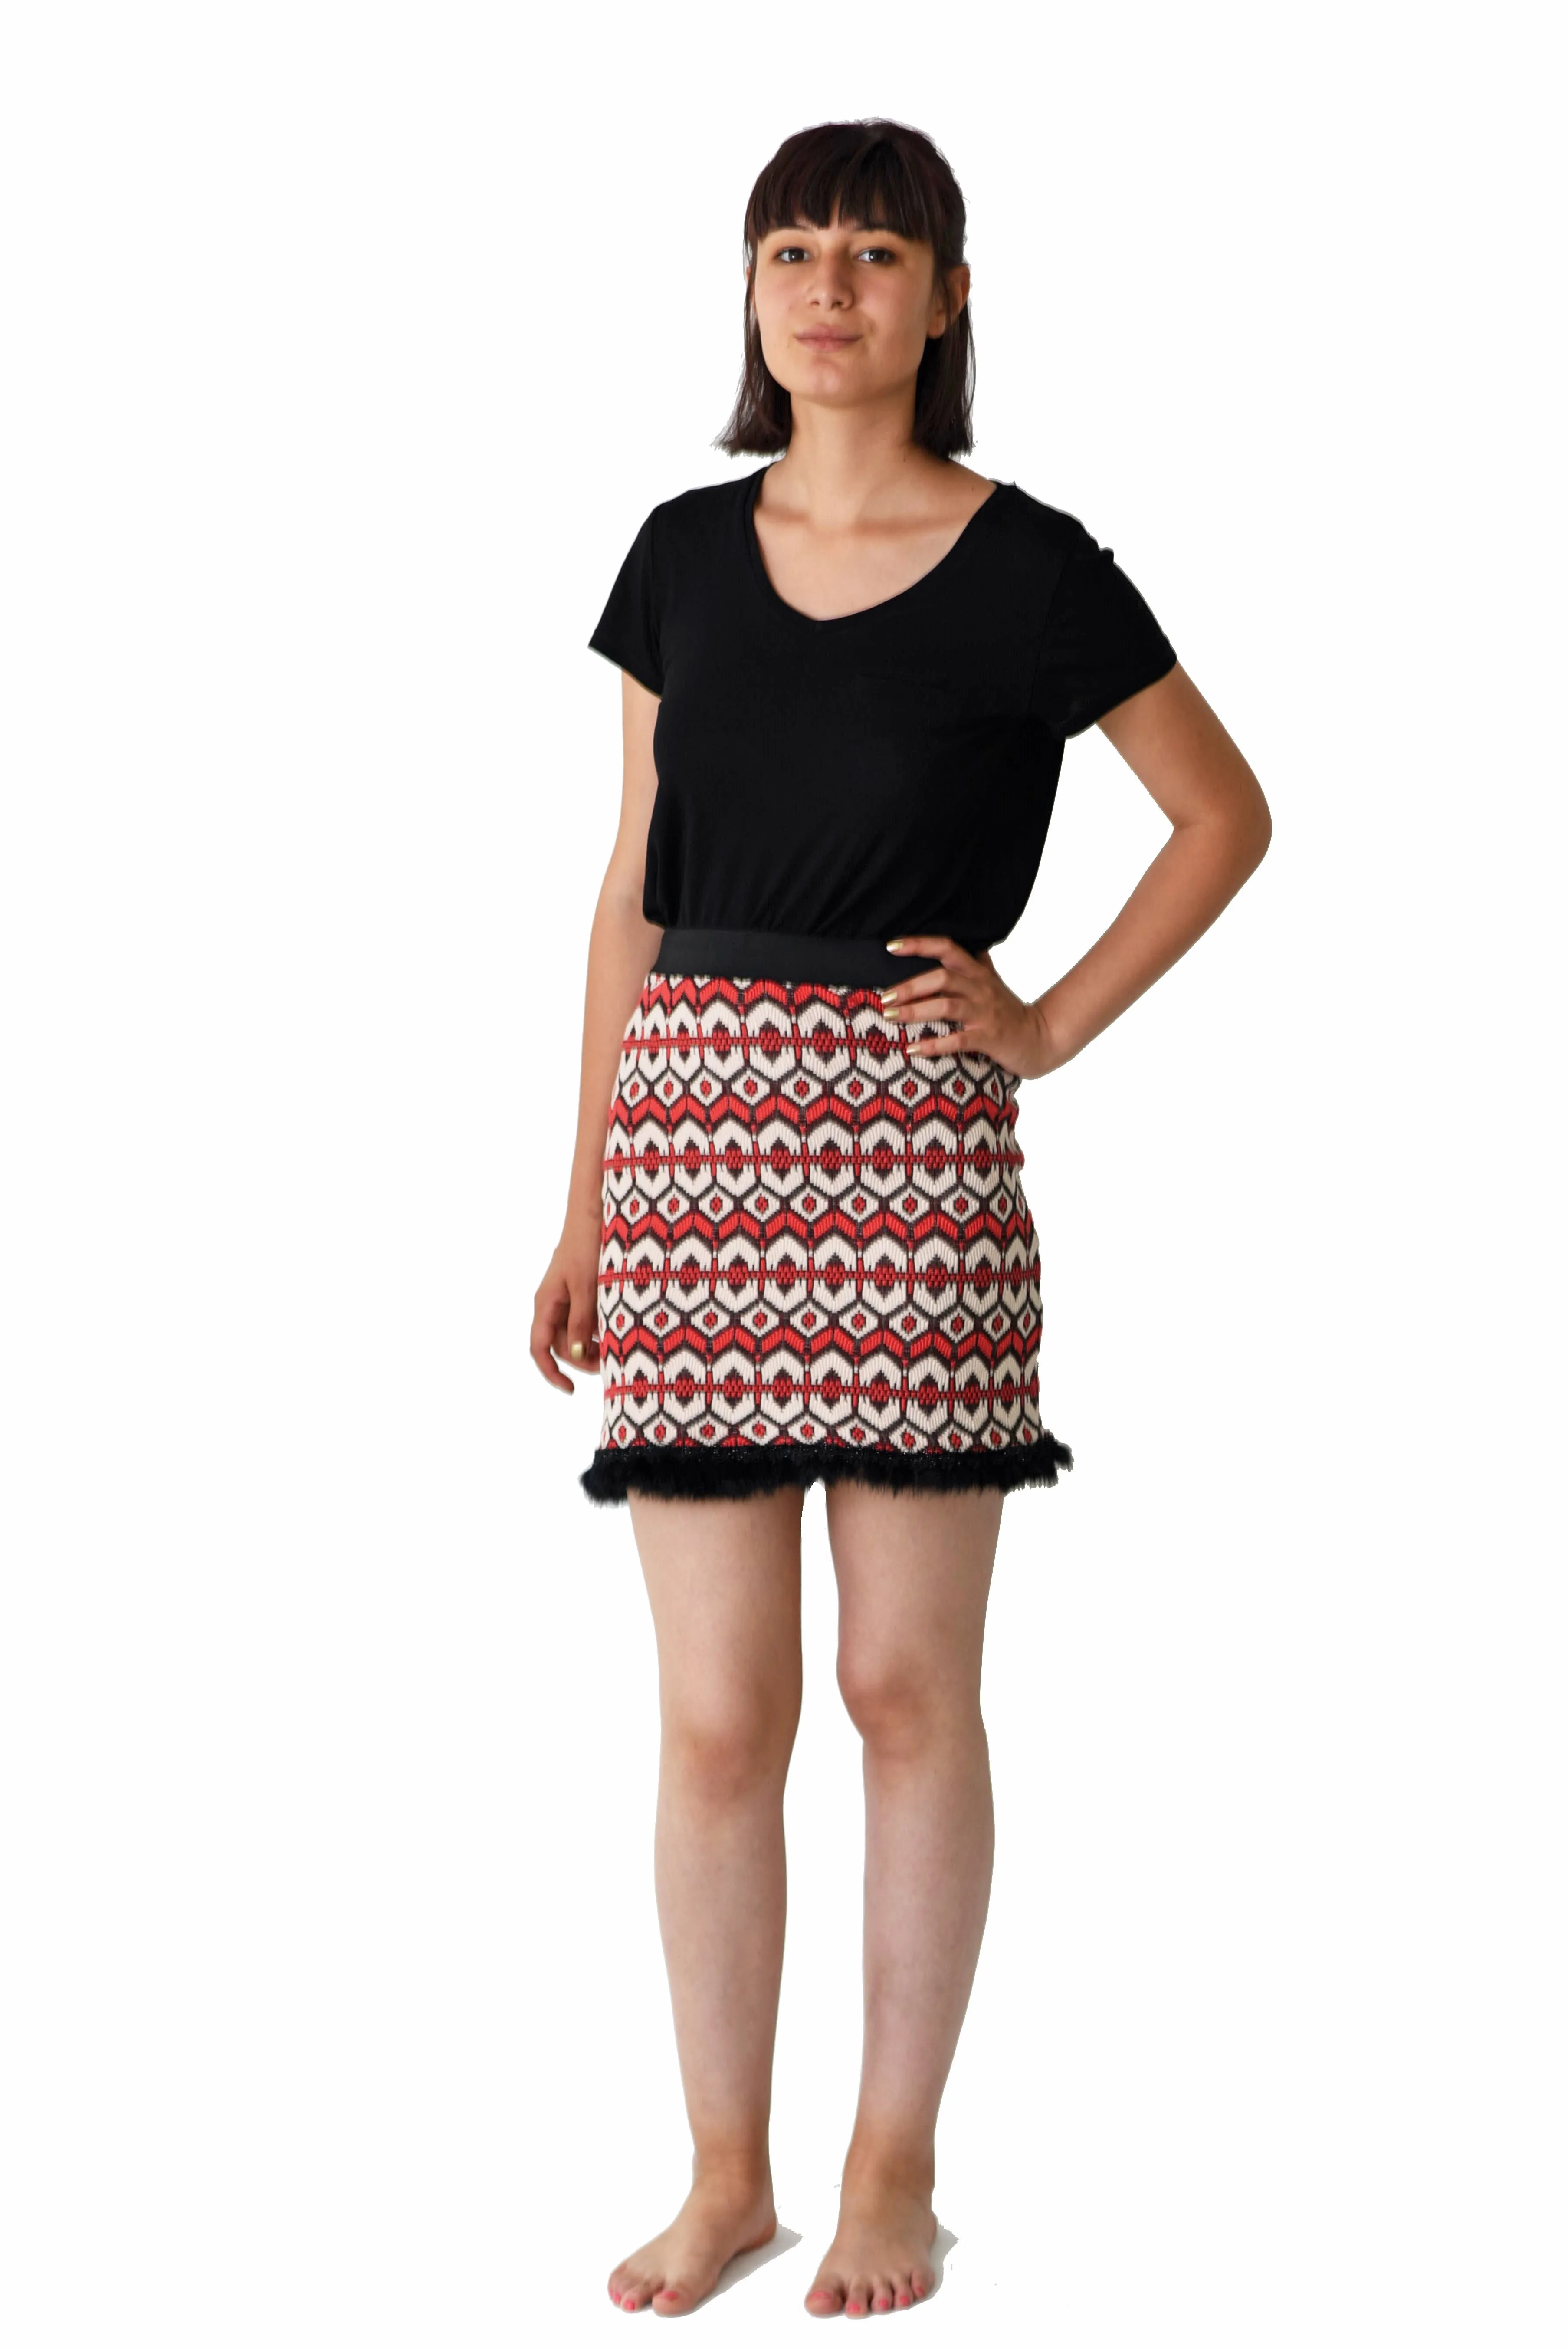 Женская мини-юбка, красно-черная тканая с кисточками от AliExpress RU&CIS NEW